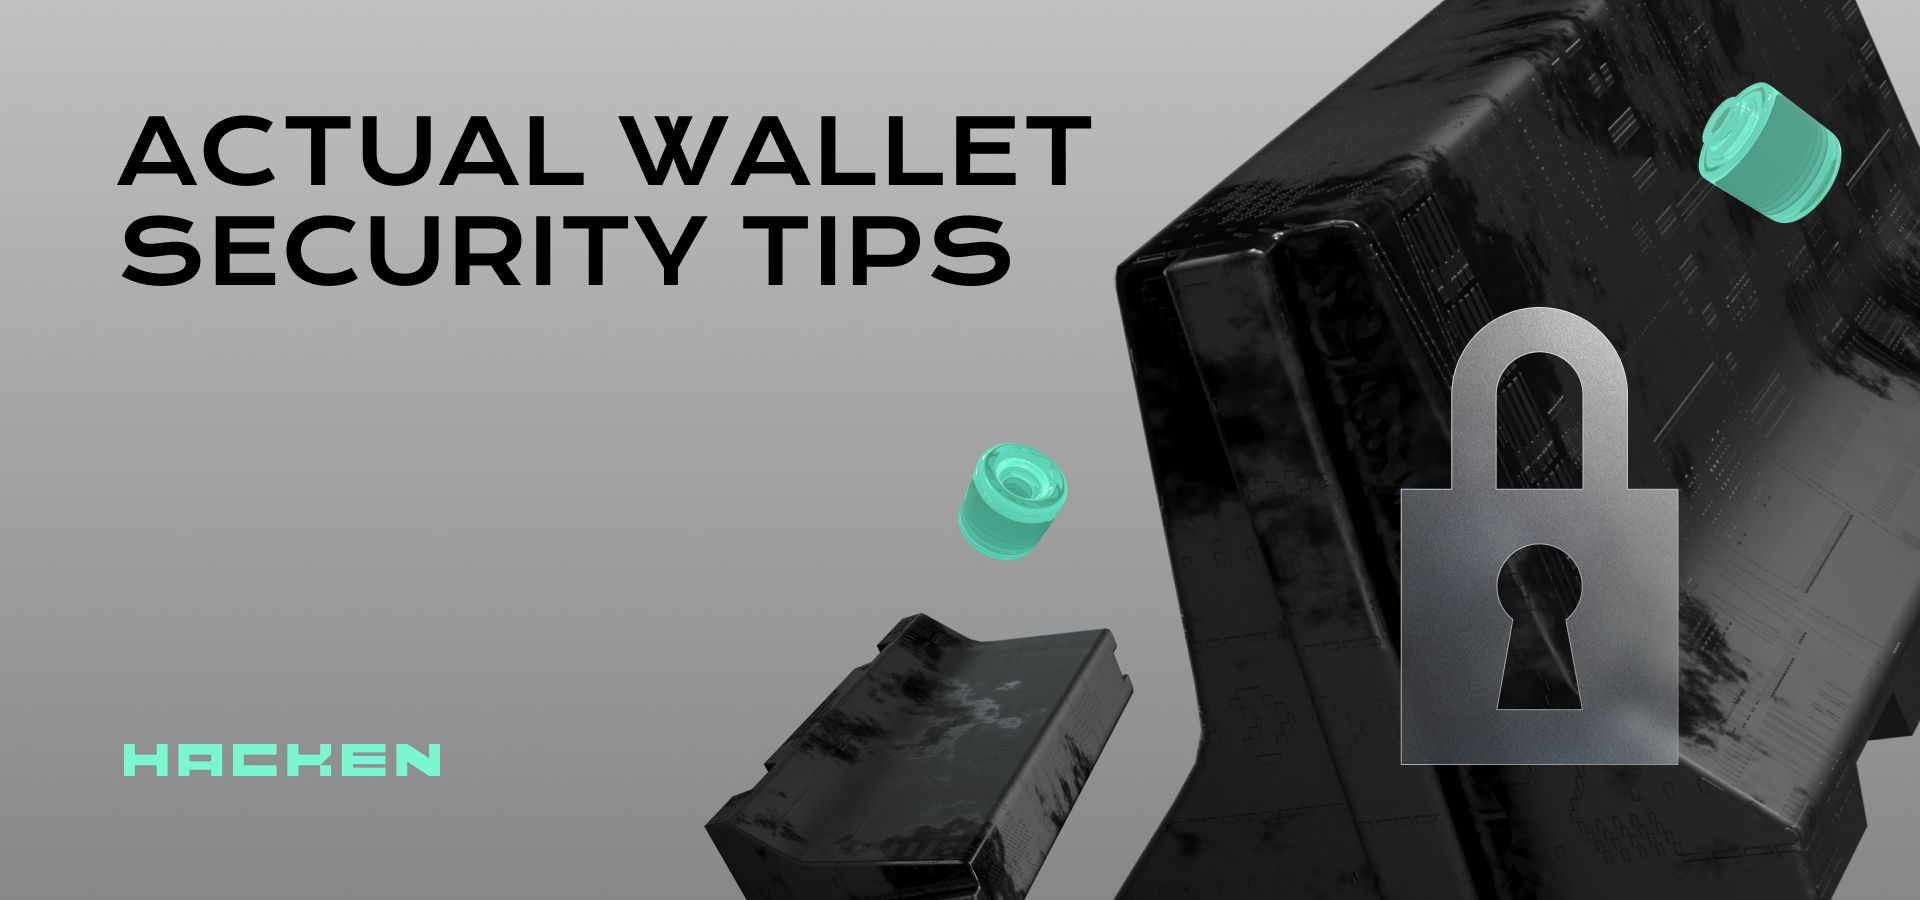 Actual wallet security tips